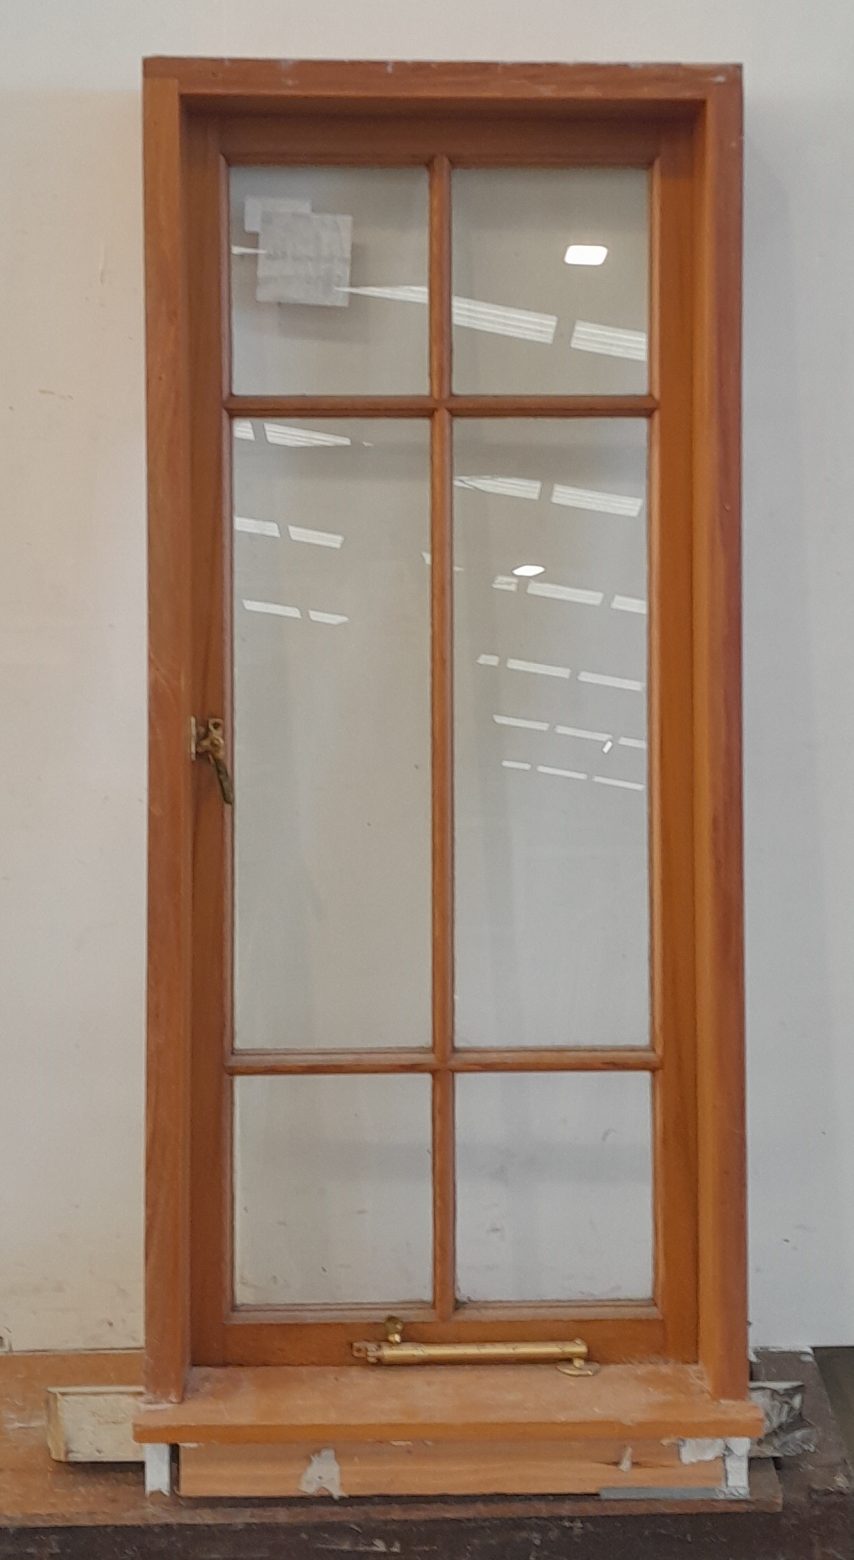 Wooden Colonial style casement window